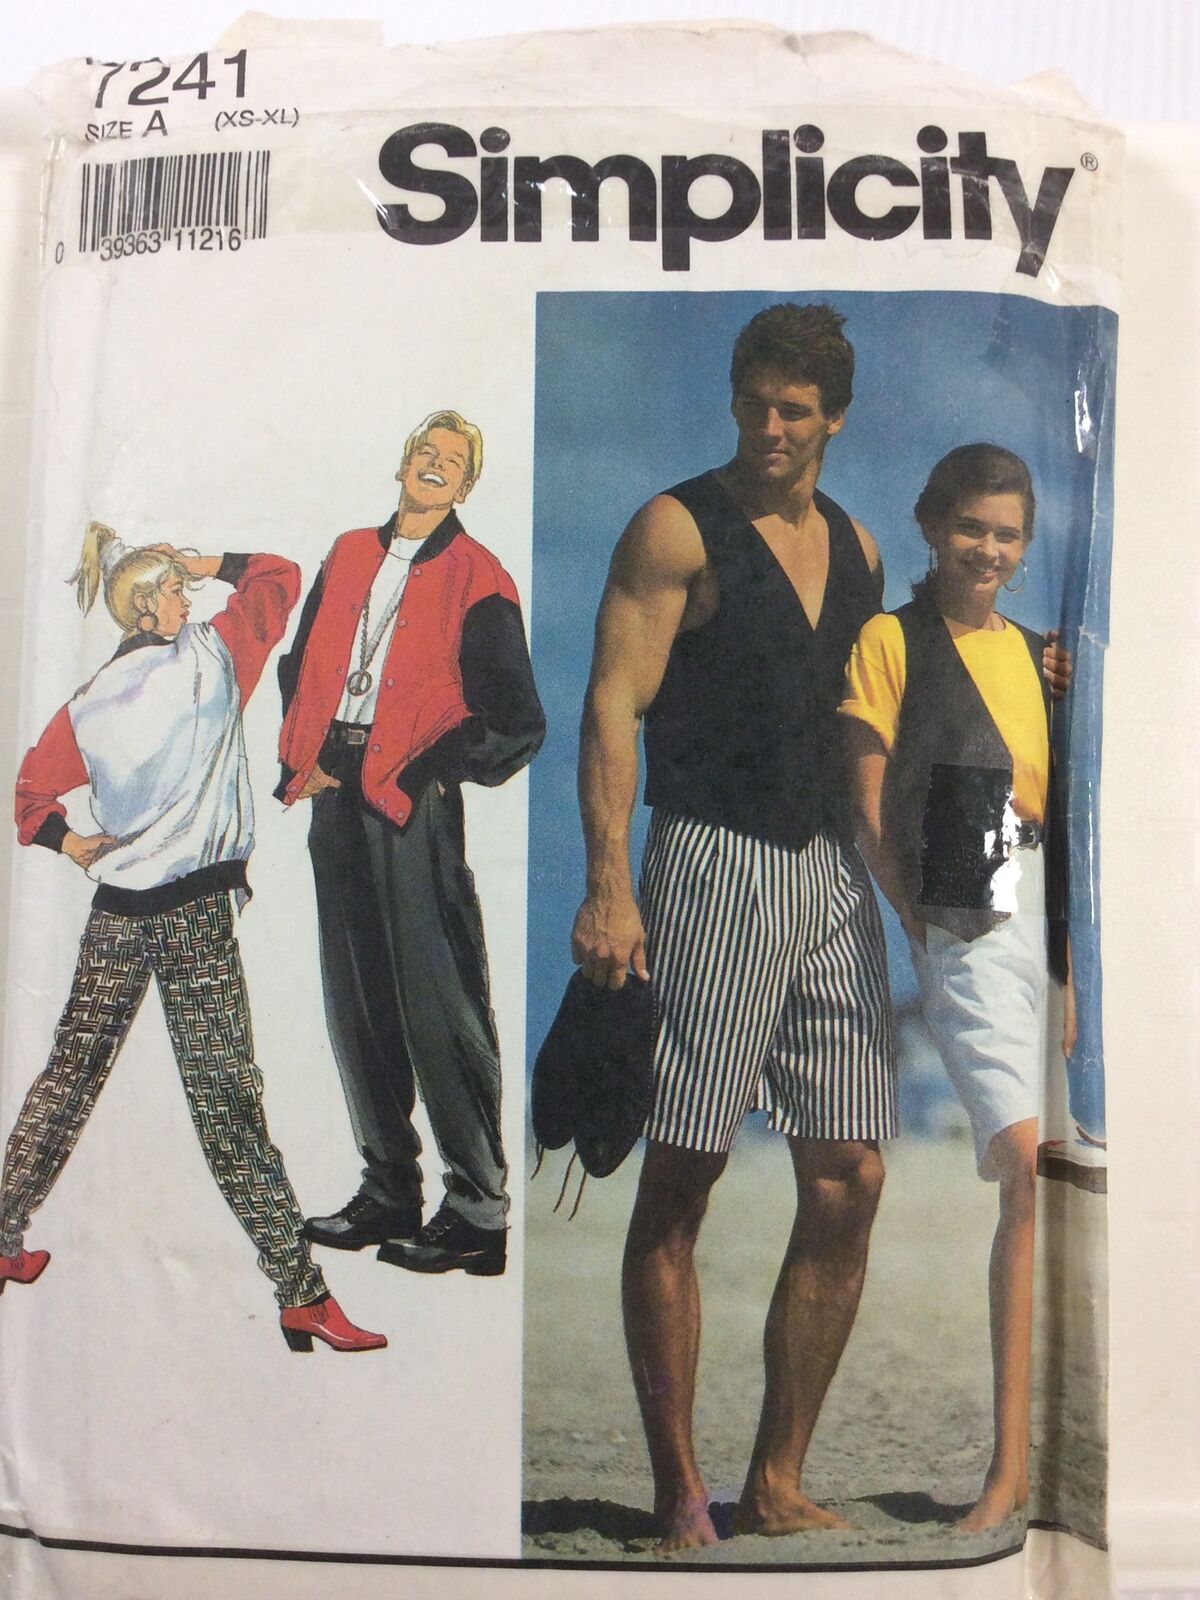 1991 Simplicity 7241 VTG Sewing Pattern Men Pants Shorts Vests Size A XS to XL